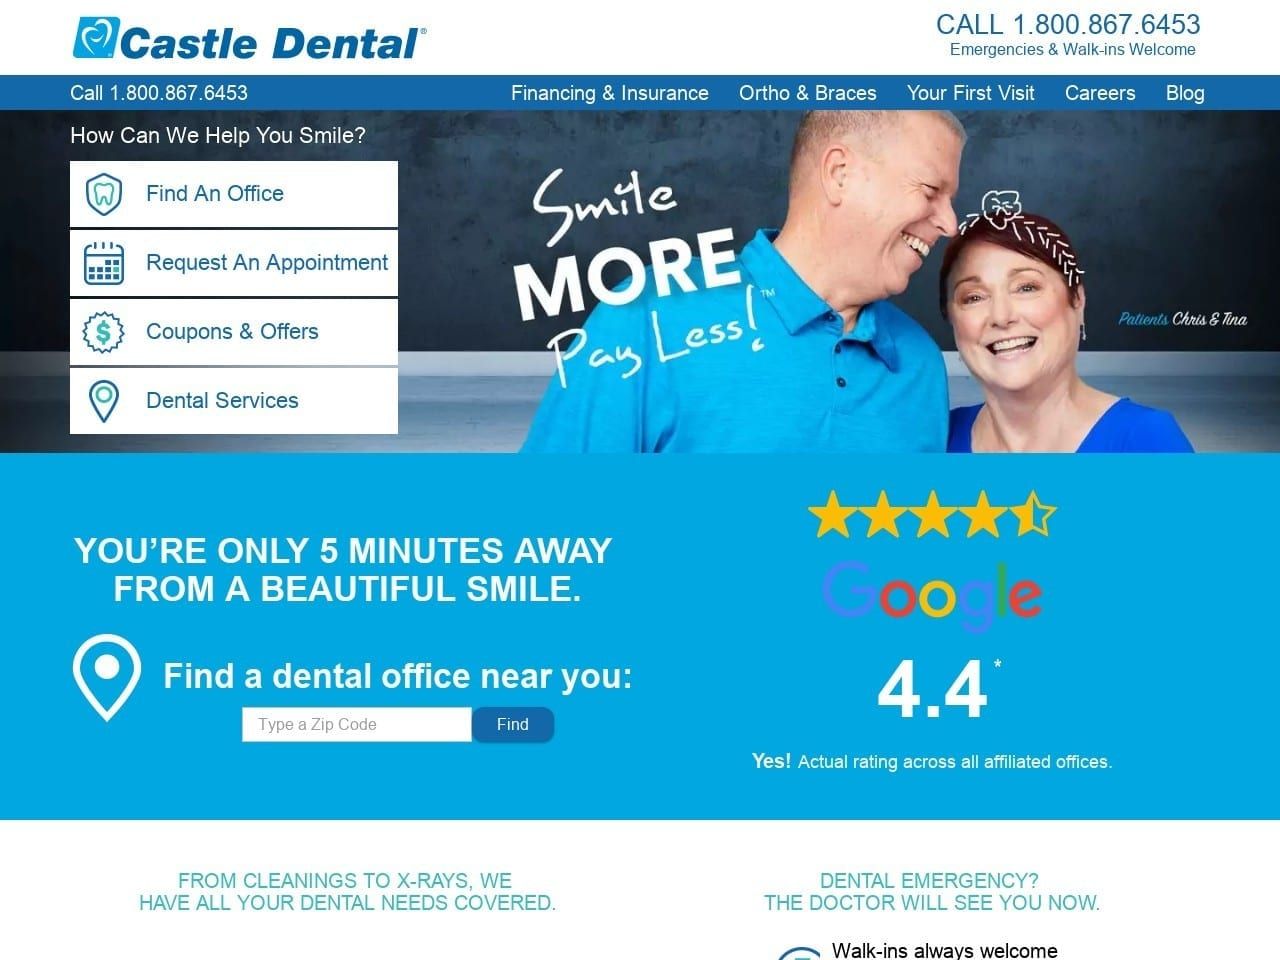 Castle Dental Center Reid Cecelia H DDS Website Screenshot from castledental.com